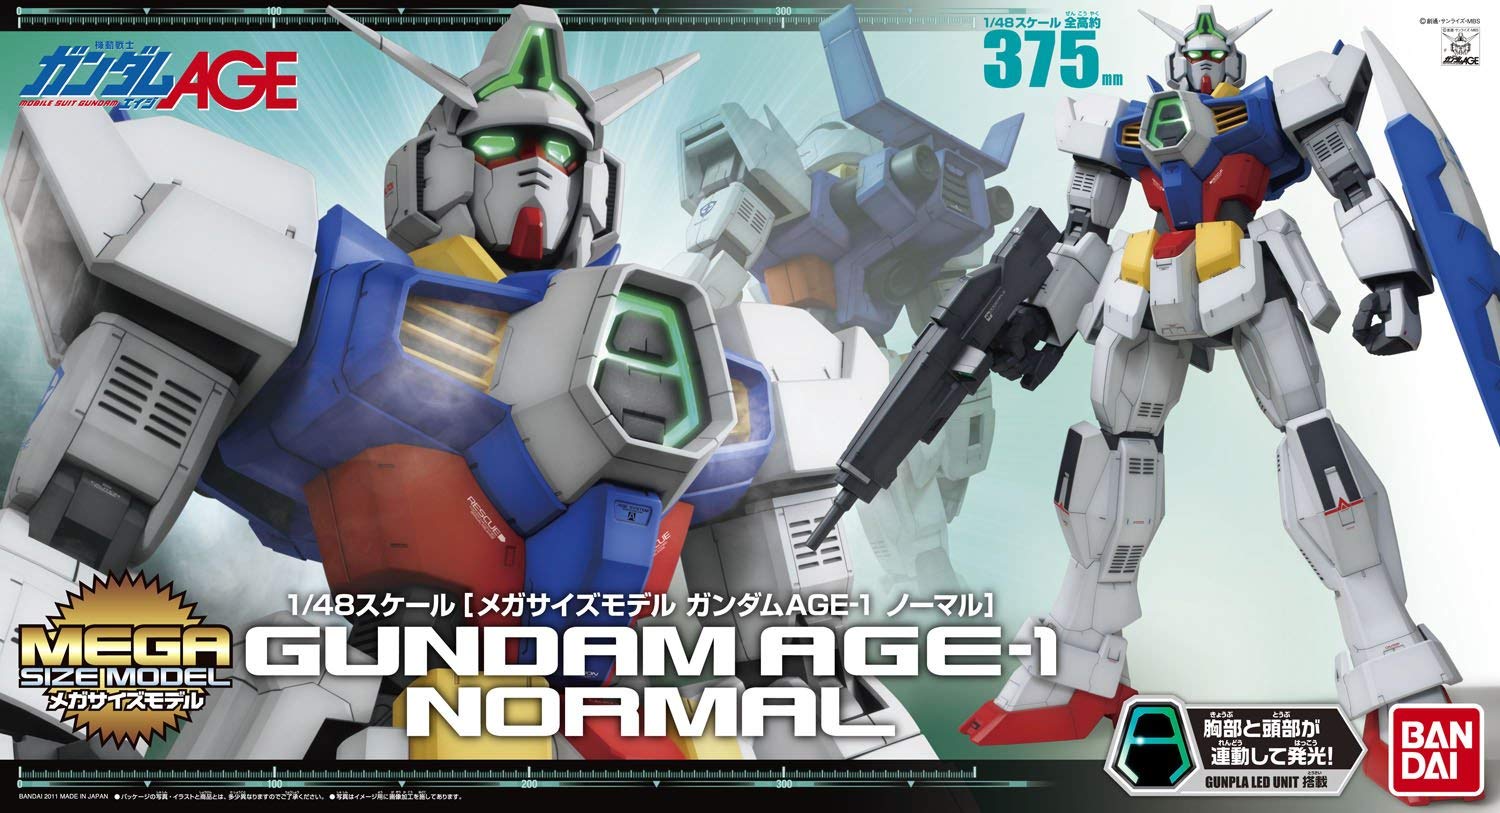 Mega Size Model AGE-1 Gundam AGE-1 Normal | Gunpla Wiki | Fandom